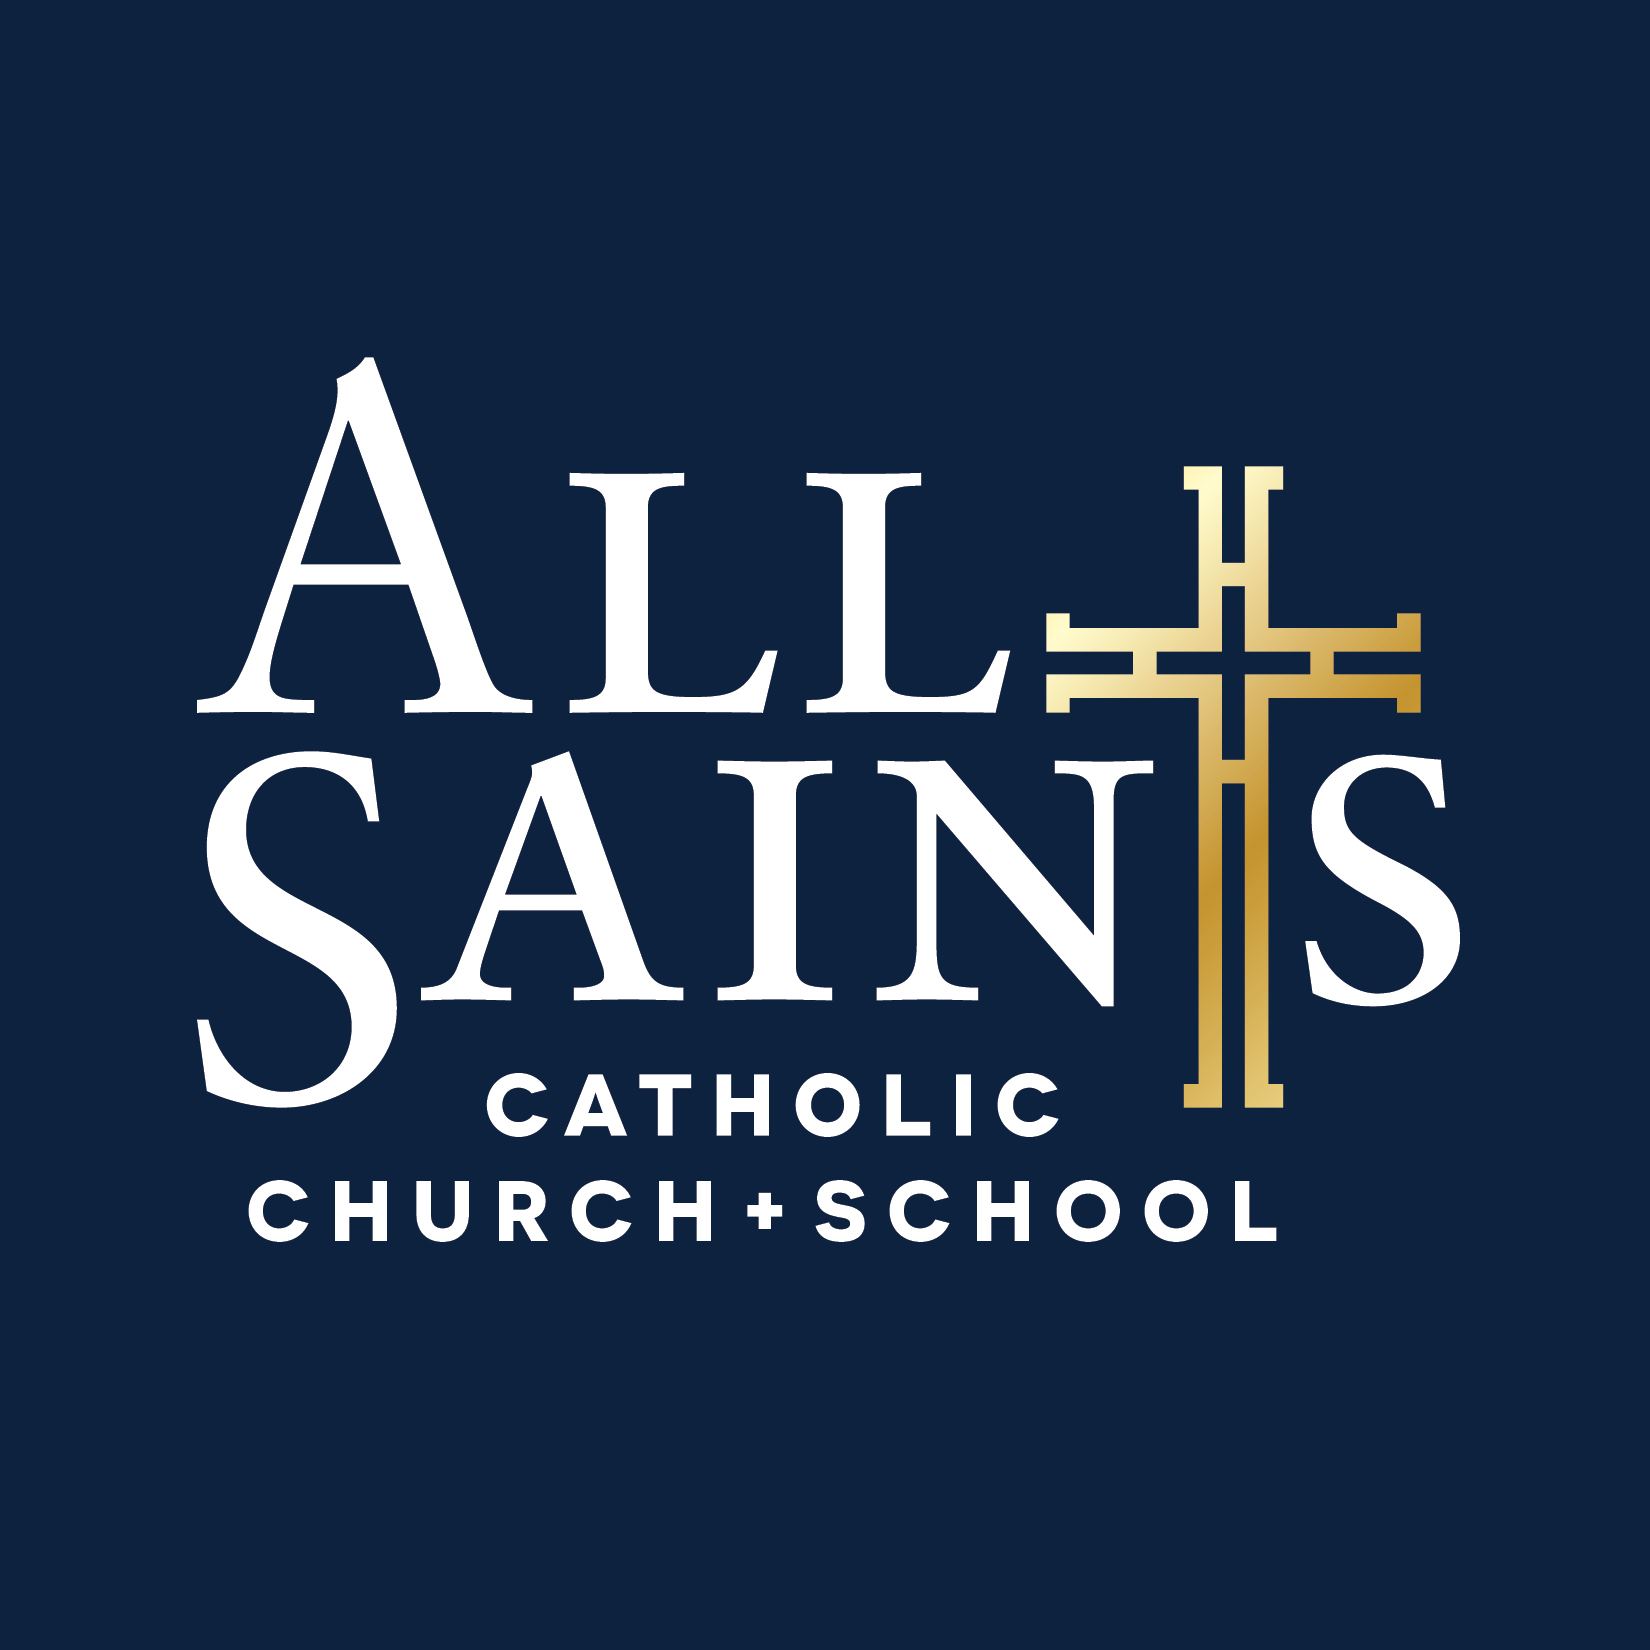 All Saints Catholic Church & School logo